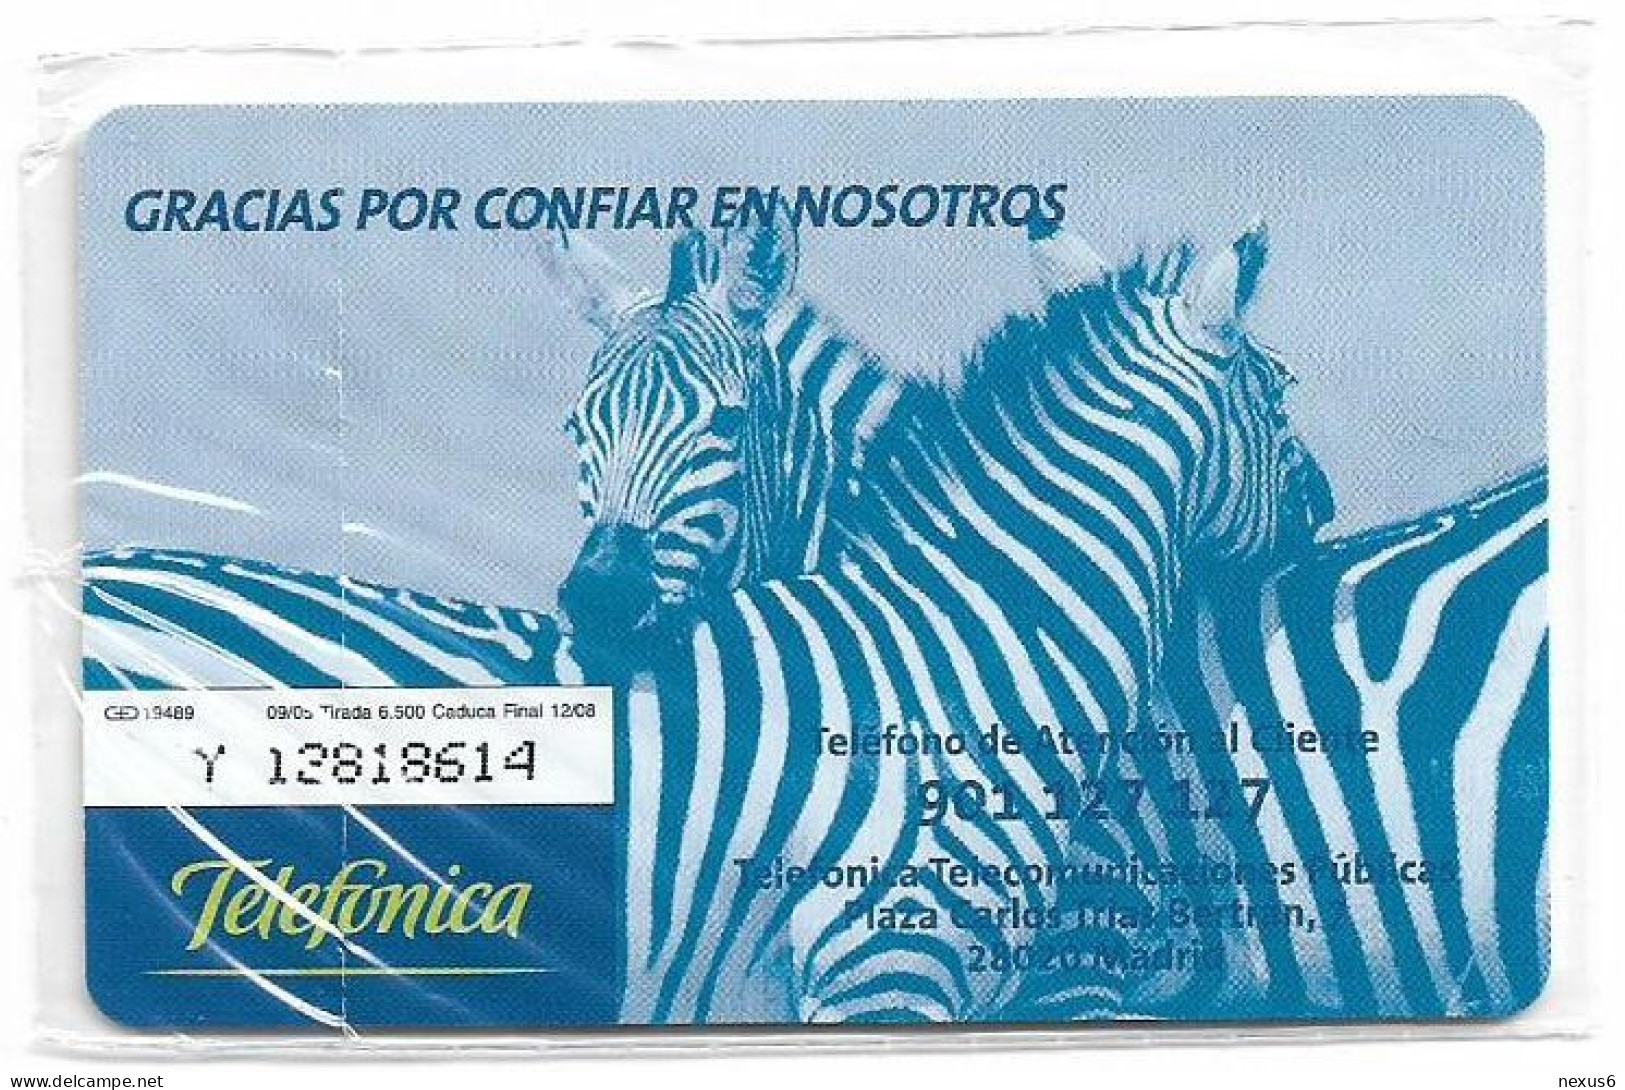 Spain - Telefónica - Cuidamos Tu Confianza - Zebras Animals - P-572 - 09.2005, 2€, 6.500ex, NSB - Privé-uitgaven